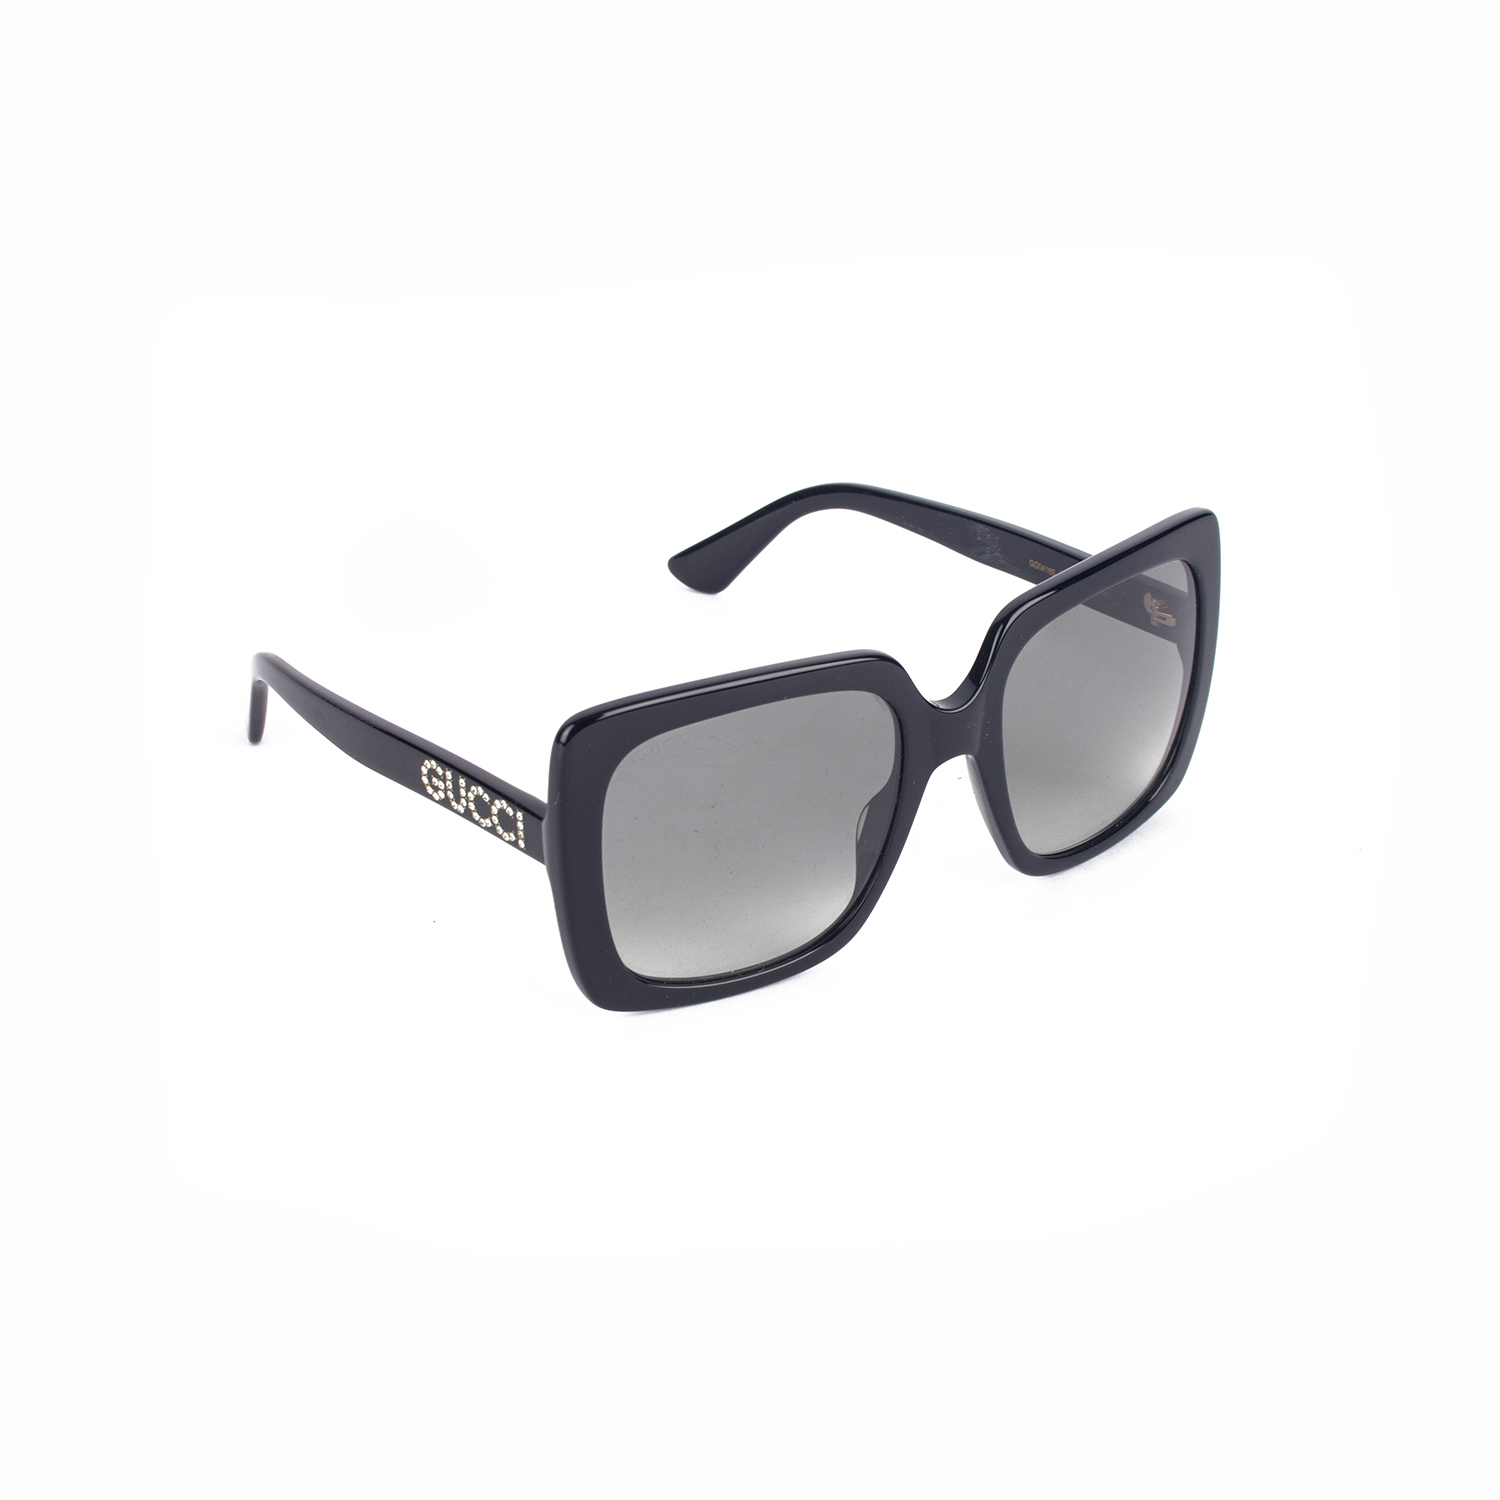 Black Square Stone Sunglasses